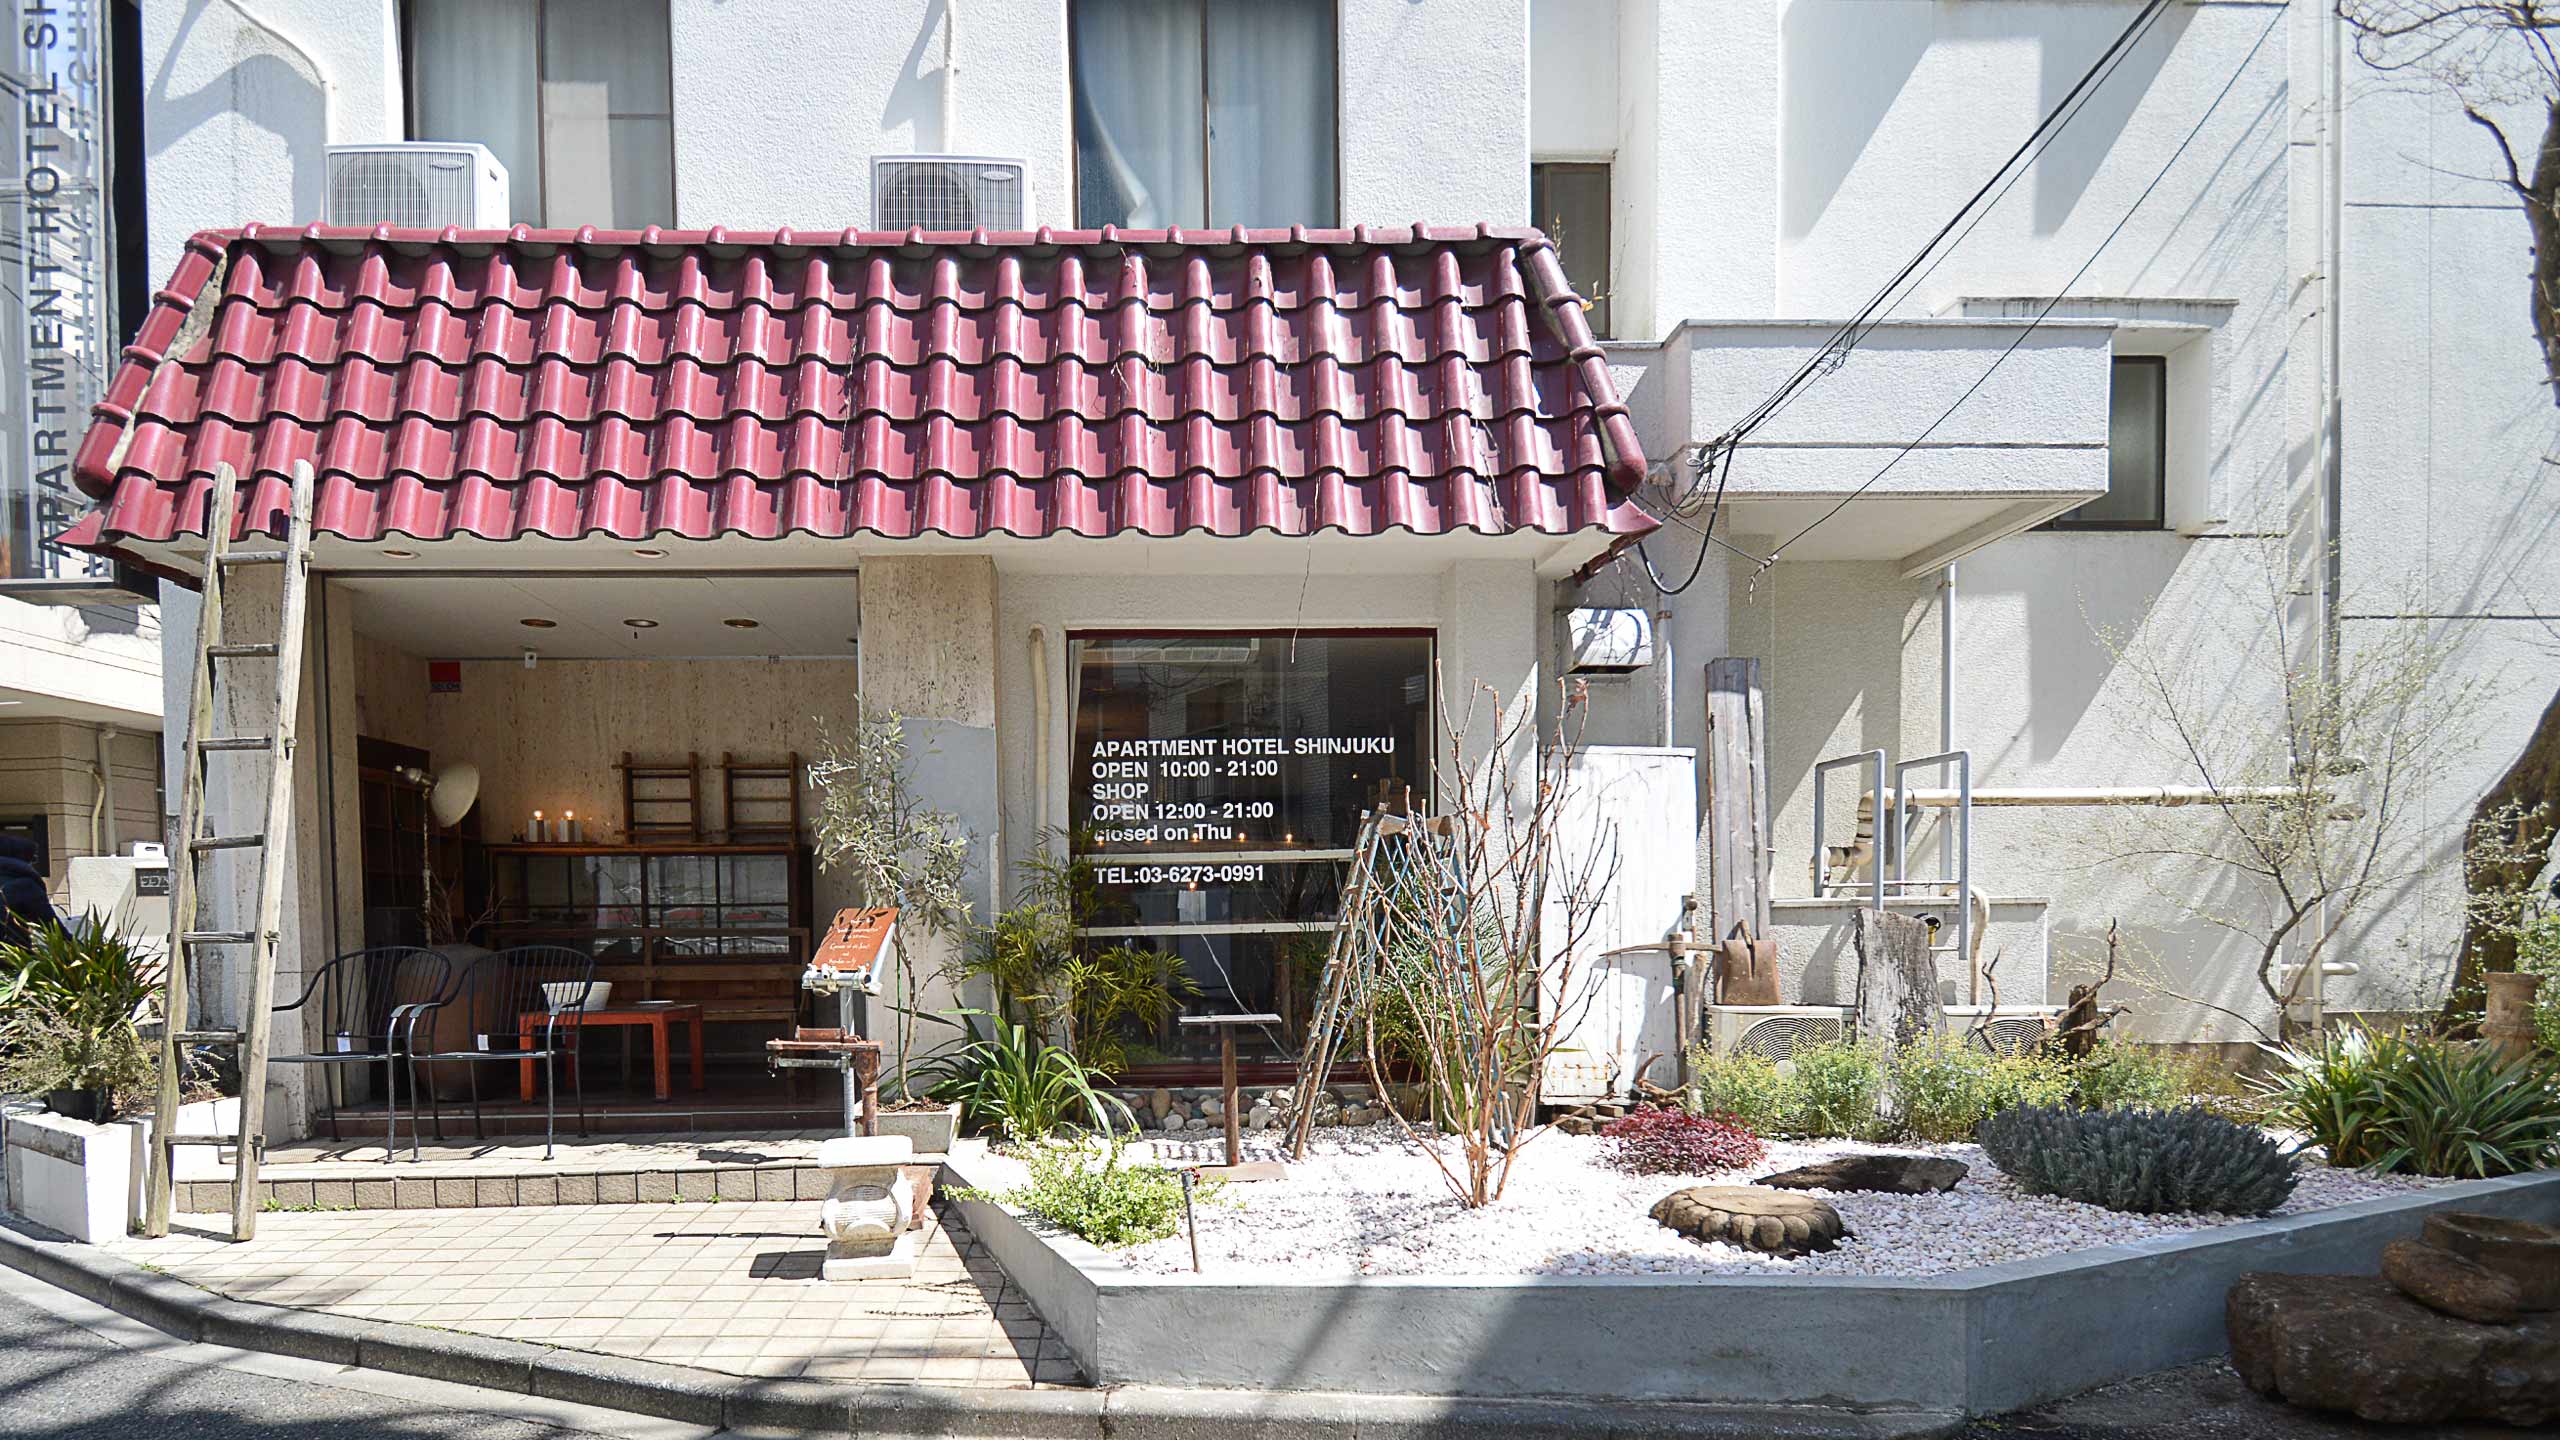 ABOUT APARTMENT HOTEL SHINJUKU SHOP